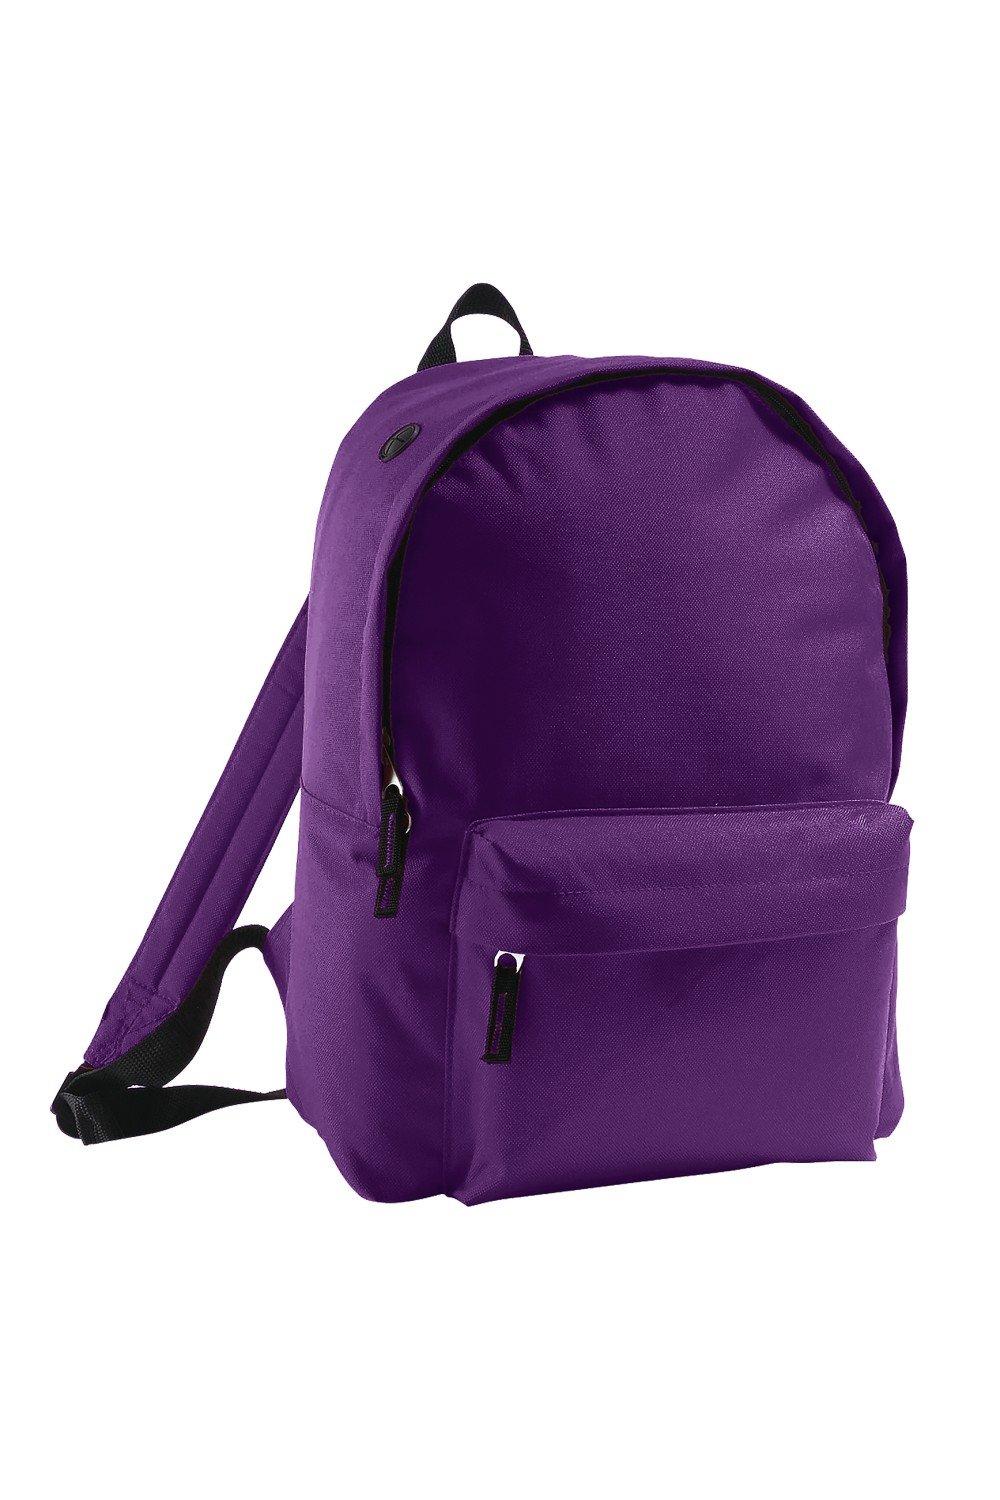 Рюкзак / сумка-рюкзак Rider SOL'S, фиолетовый рюкзак сумка рюкзак rider sol s золото